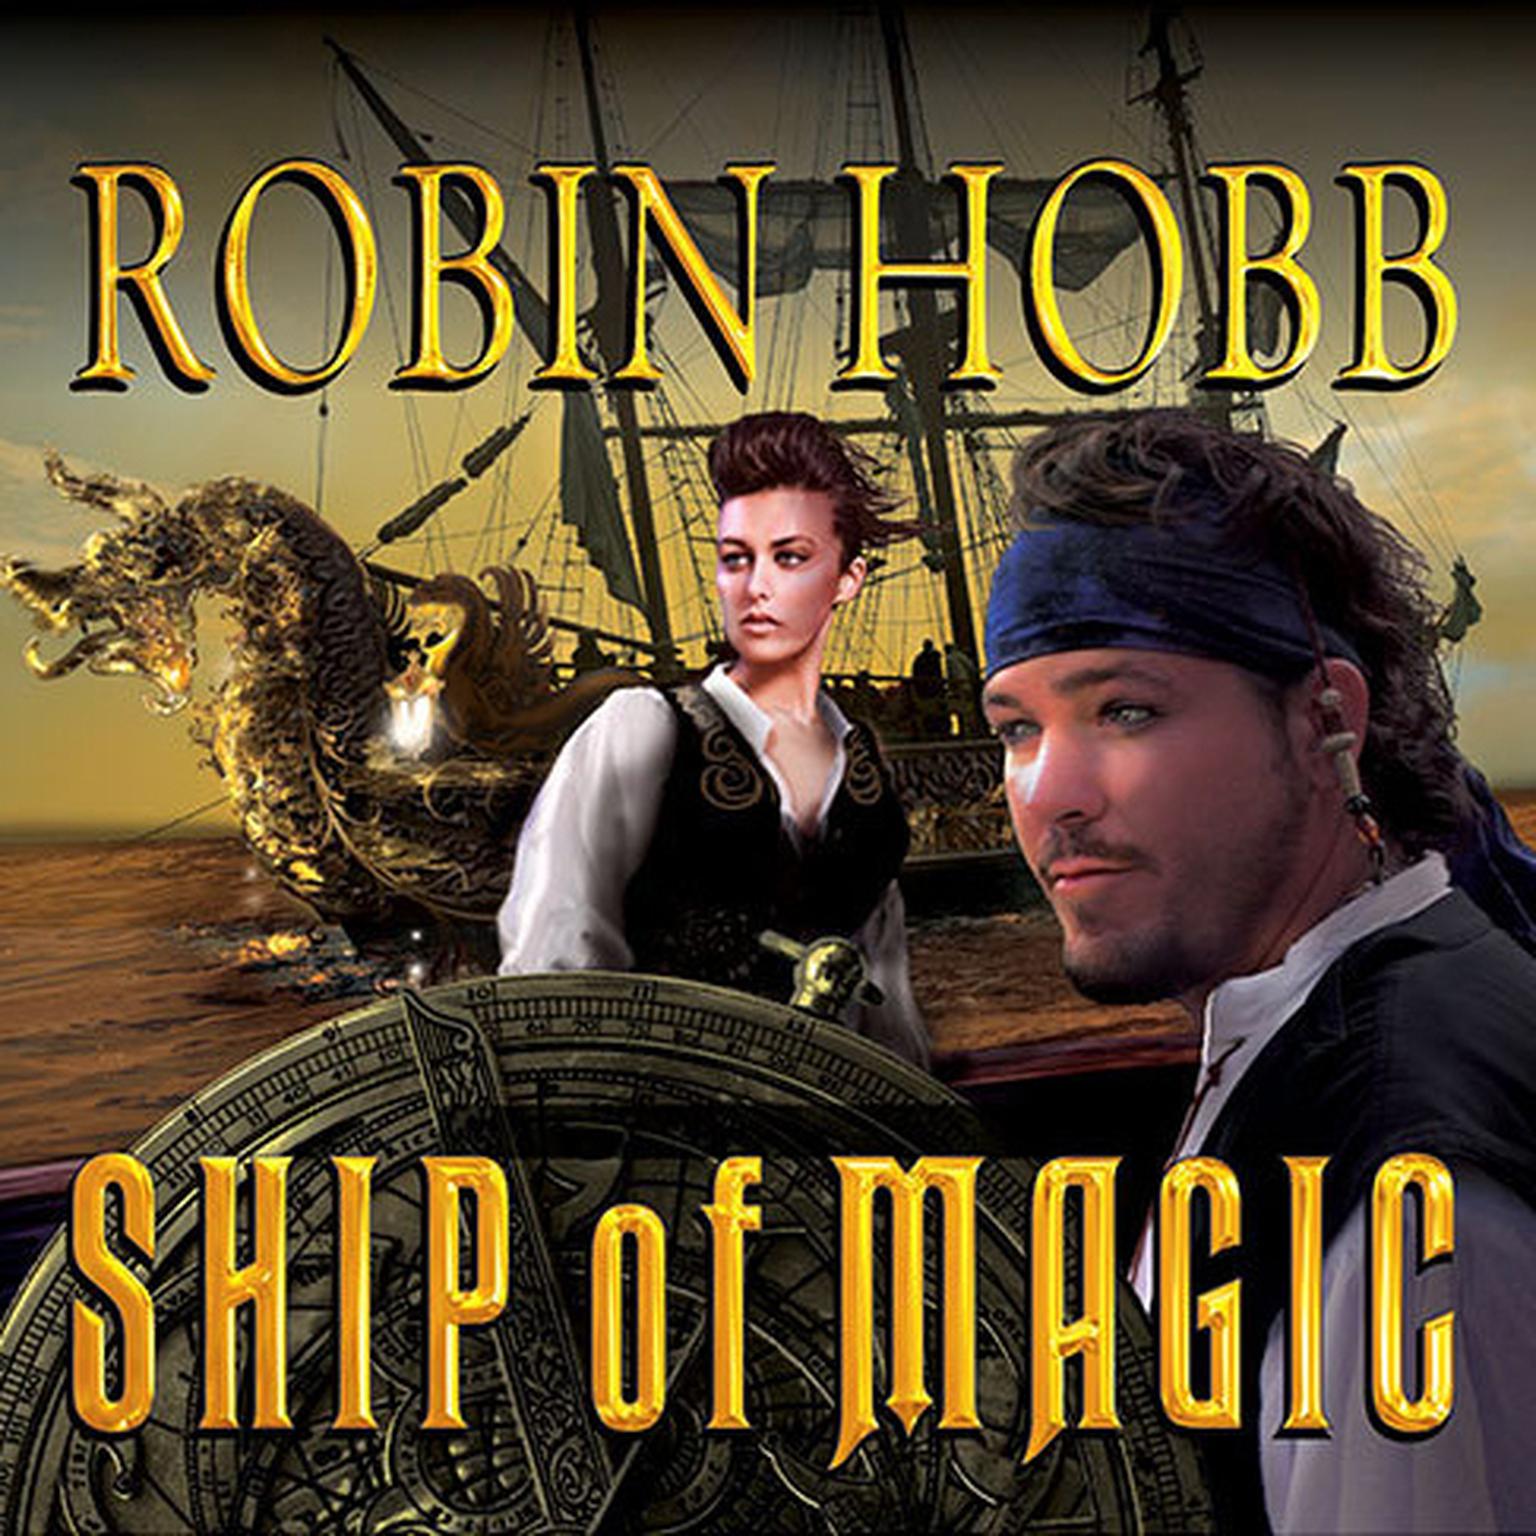 Ship of Magic Audiobook, by Robin Hobb